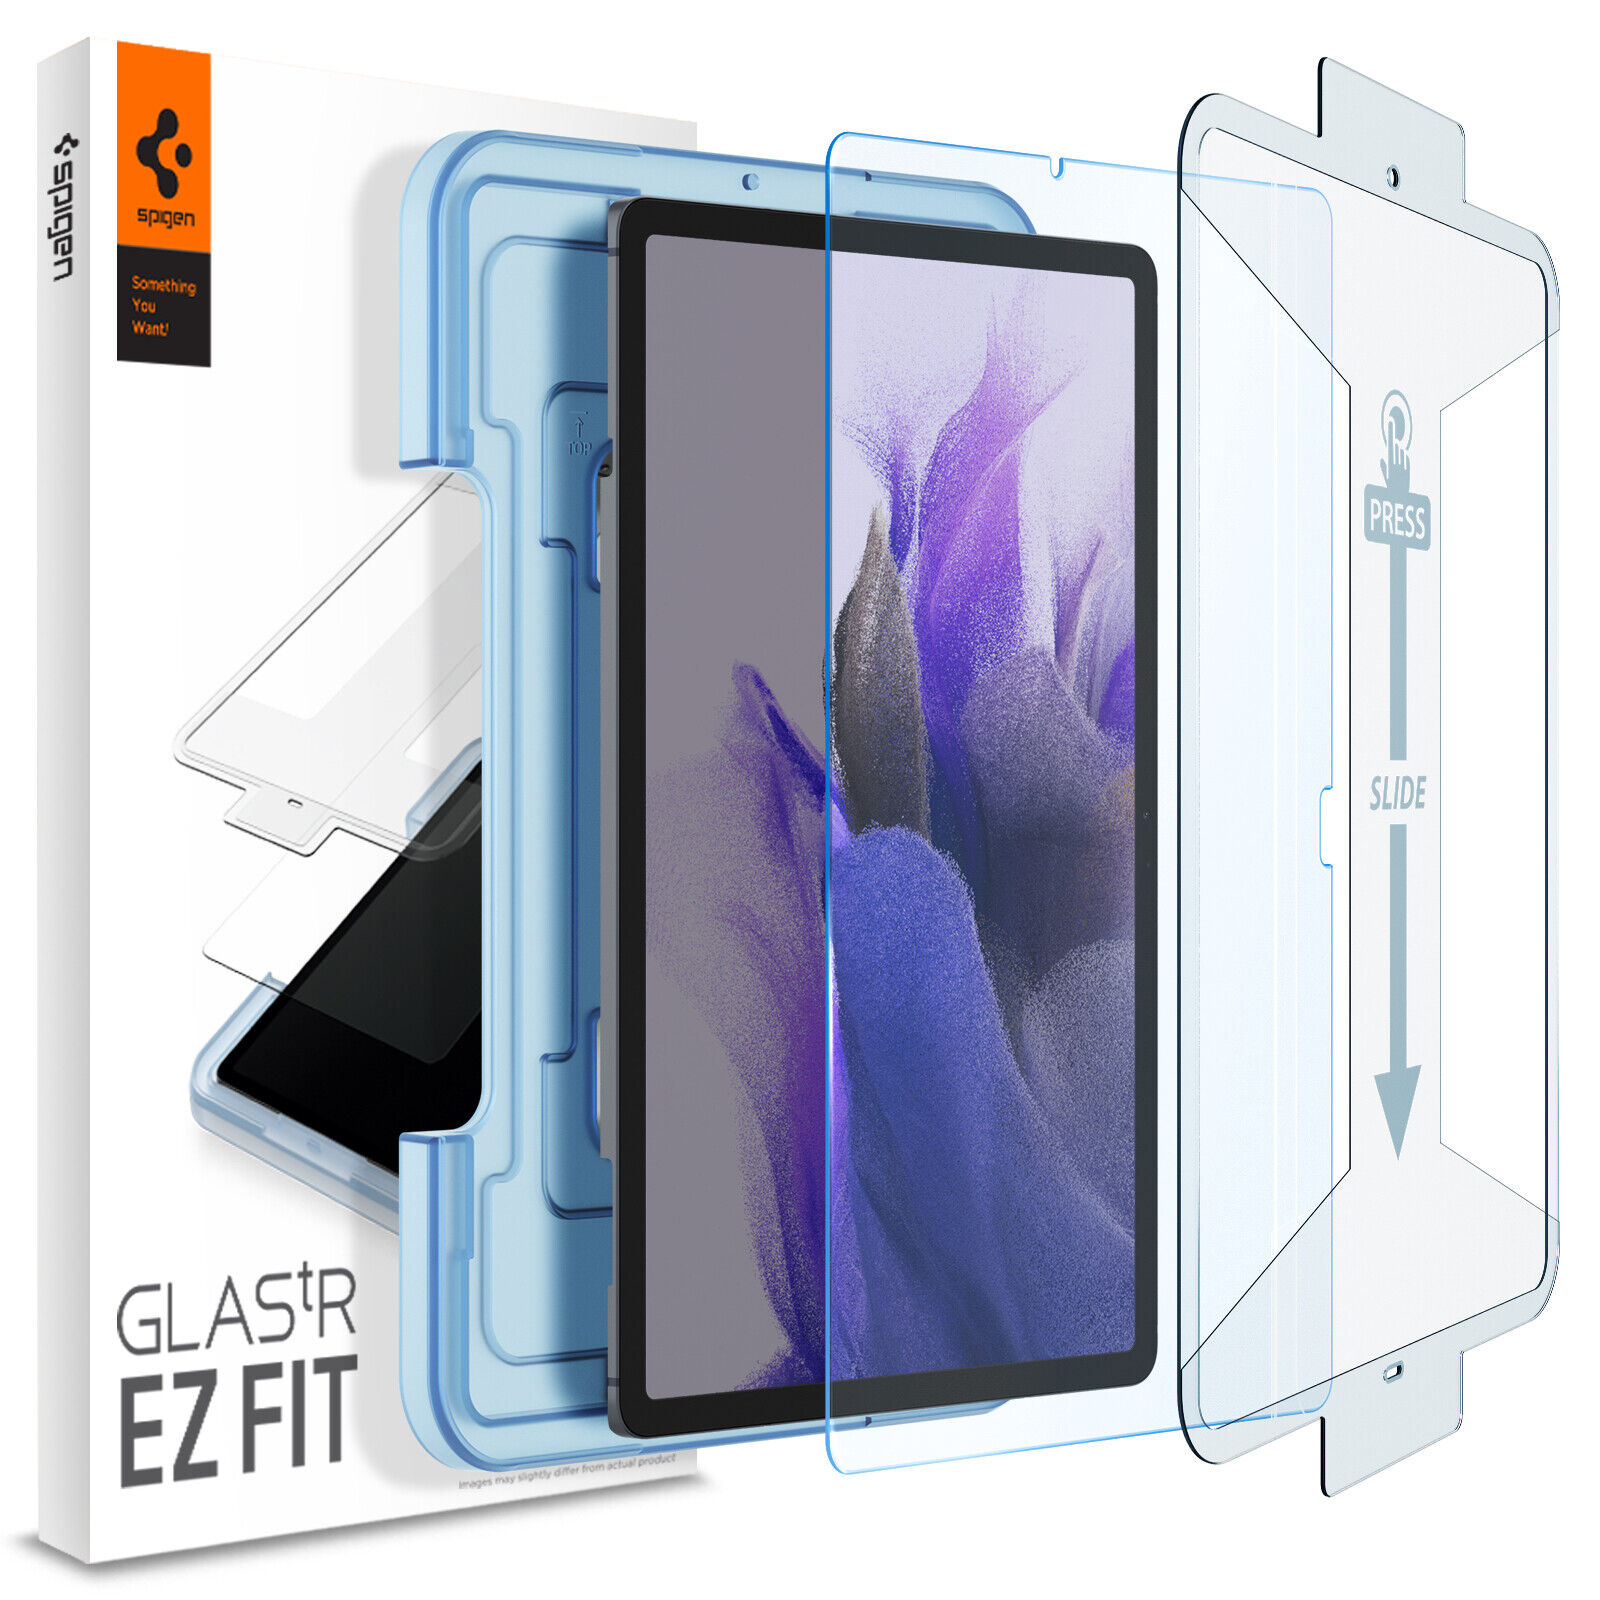 Galaxy Tab S7 FE 5G | Spigen® [EZ Fit Glas.tR] Tempered Glass Screen Protector